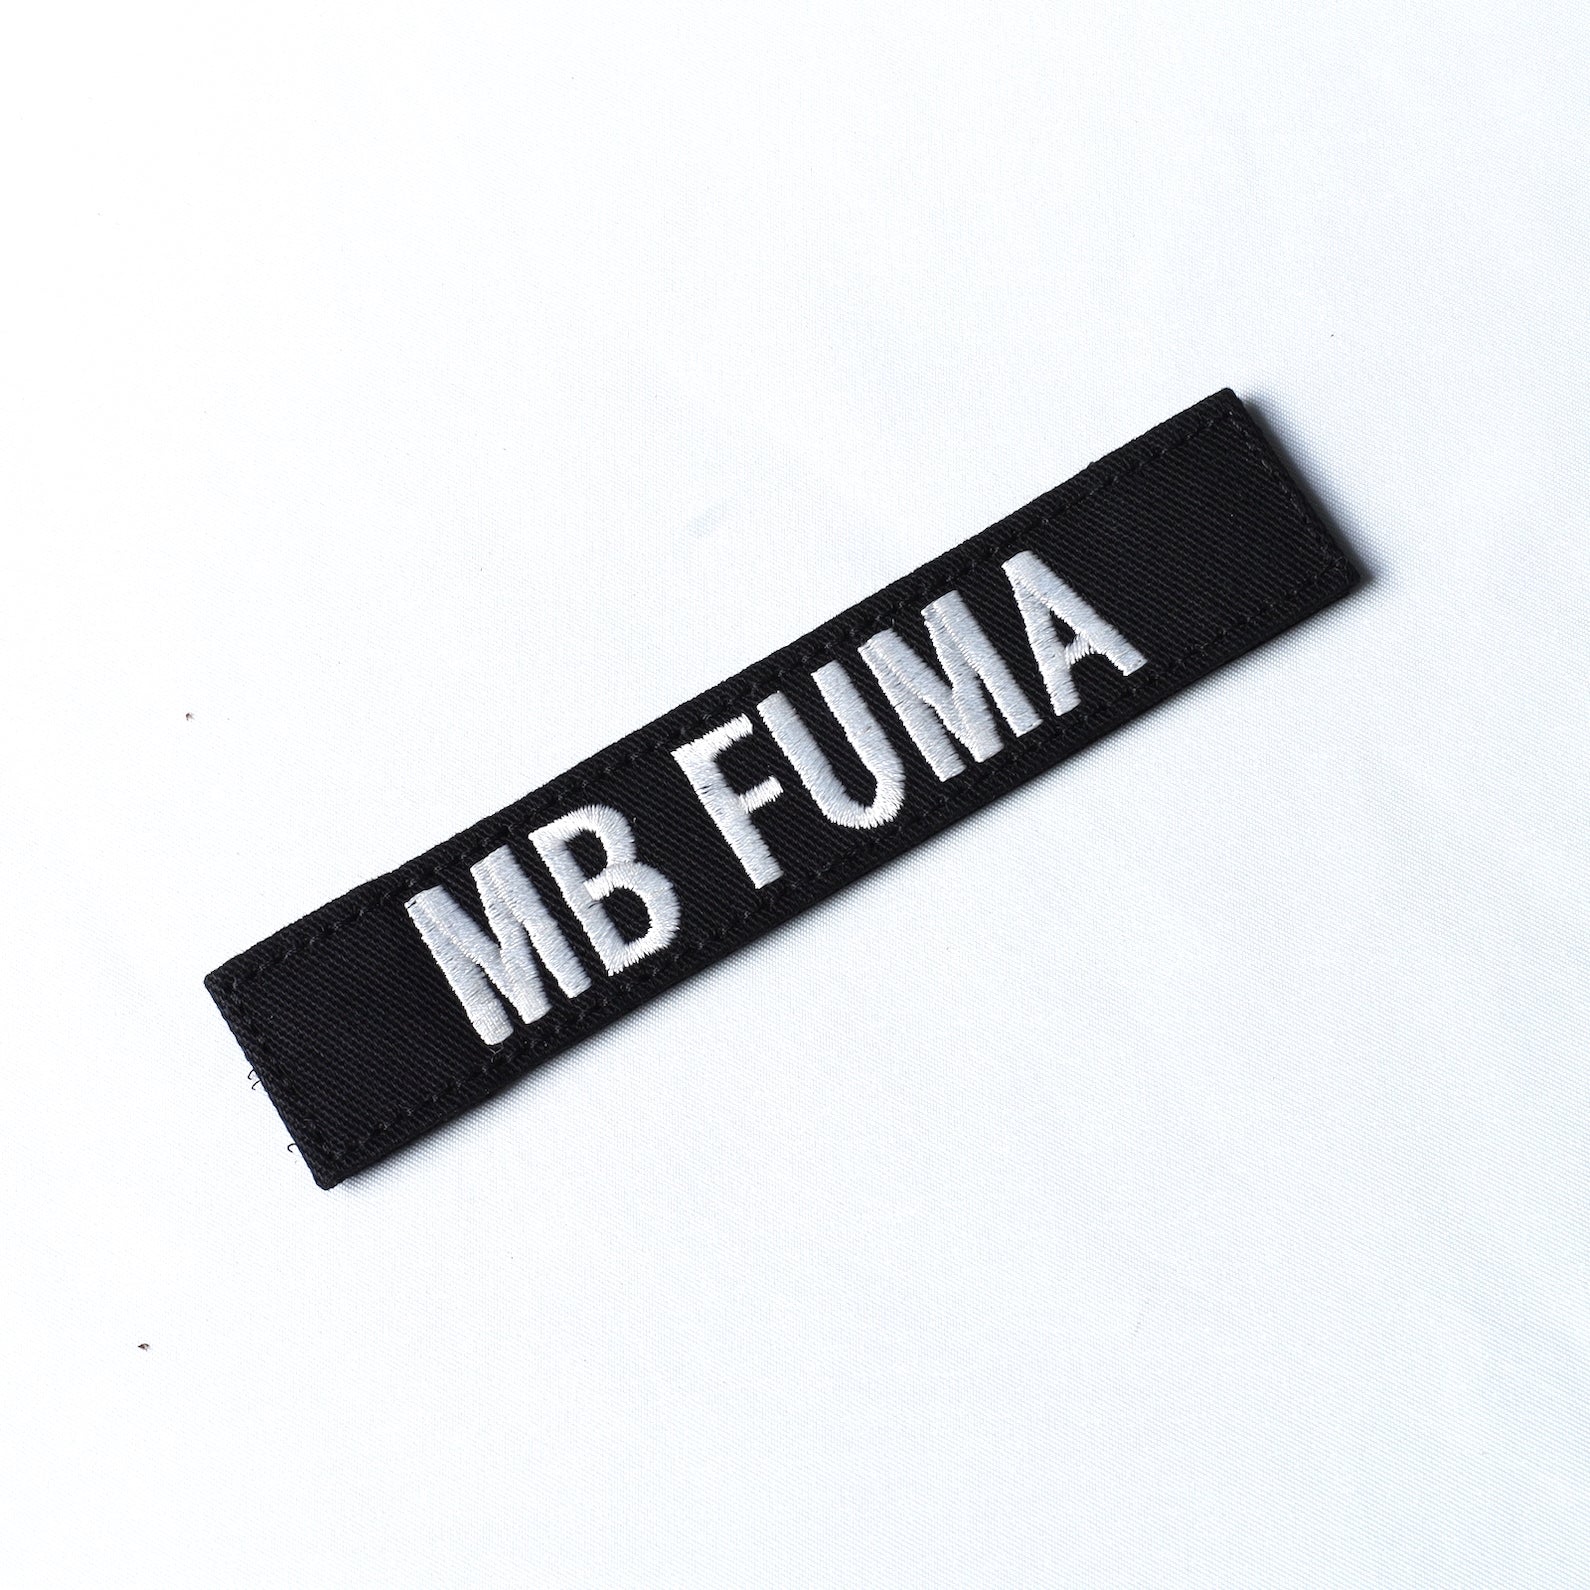 MBFUMA Velcro Patch